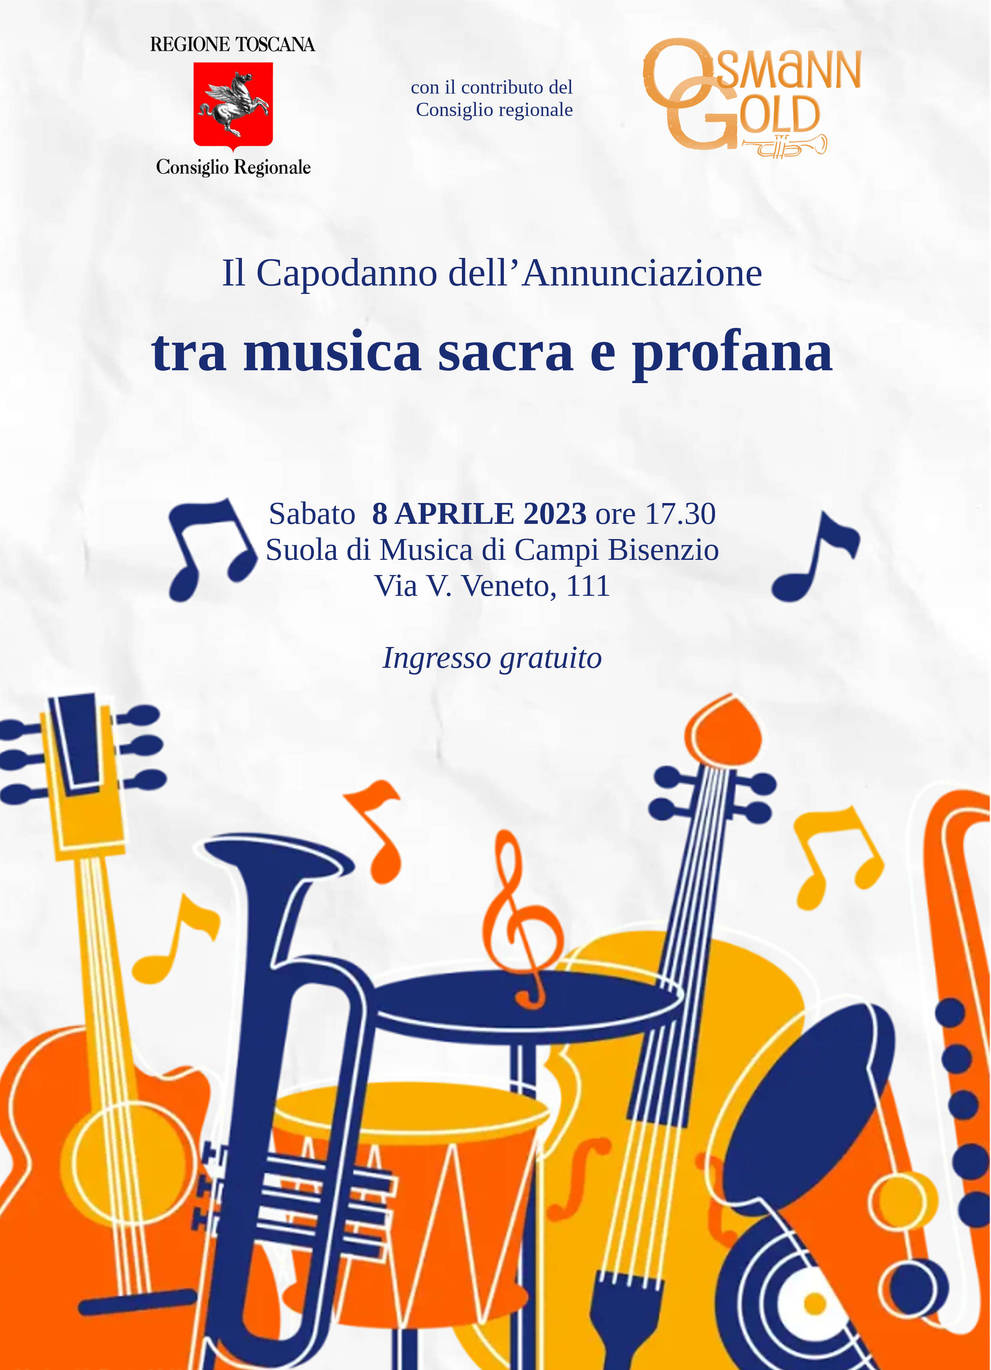 Locandina del concerto OsmannGold "Tra musica sacra e profana" a Campi Bisenzio